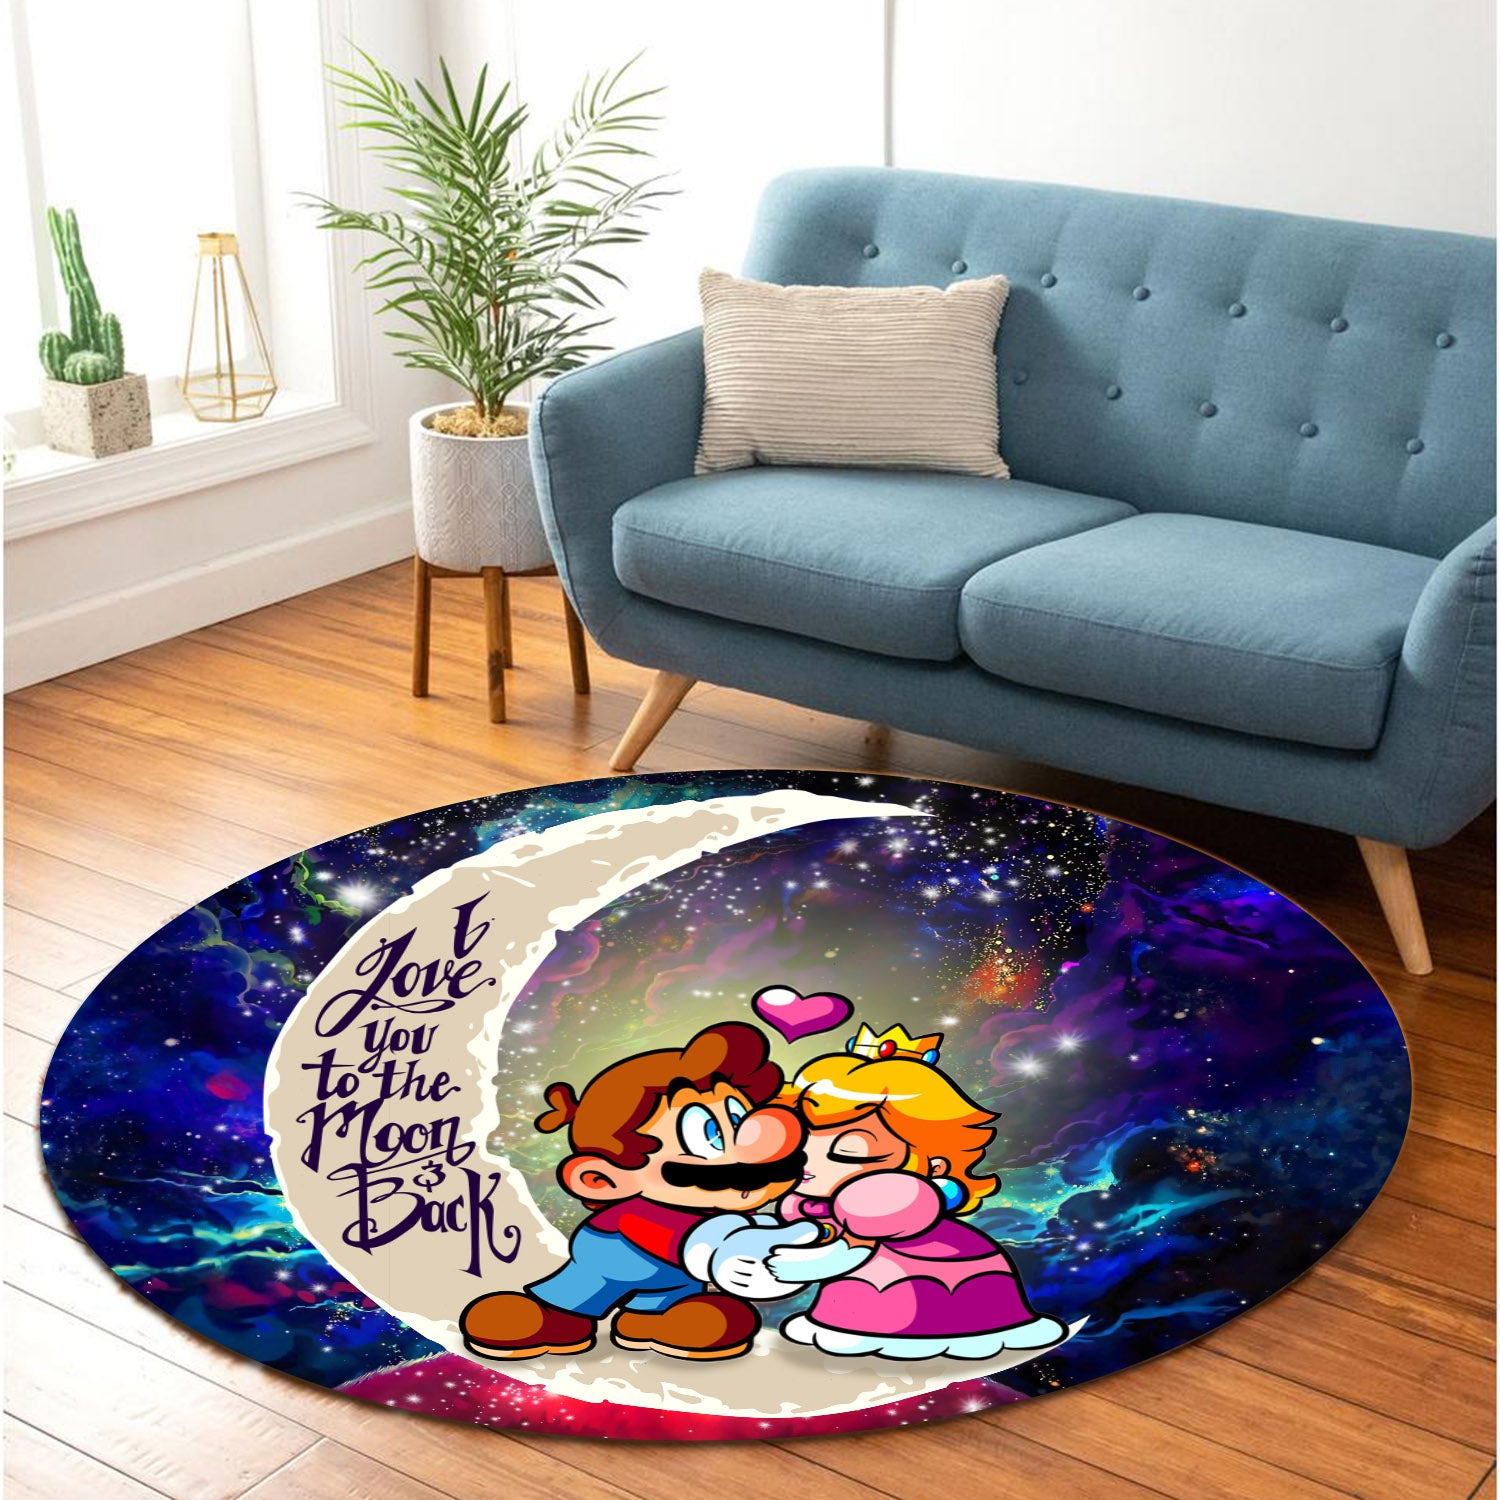 Mario Couple Love You To The Moon Galaxy Round Carpet Rug Bedroom Livingroom Home Decor Nearkii